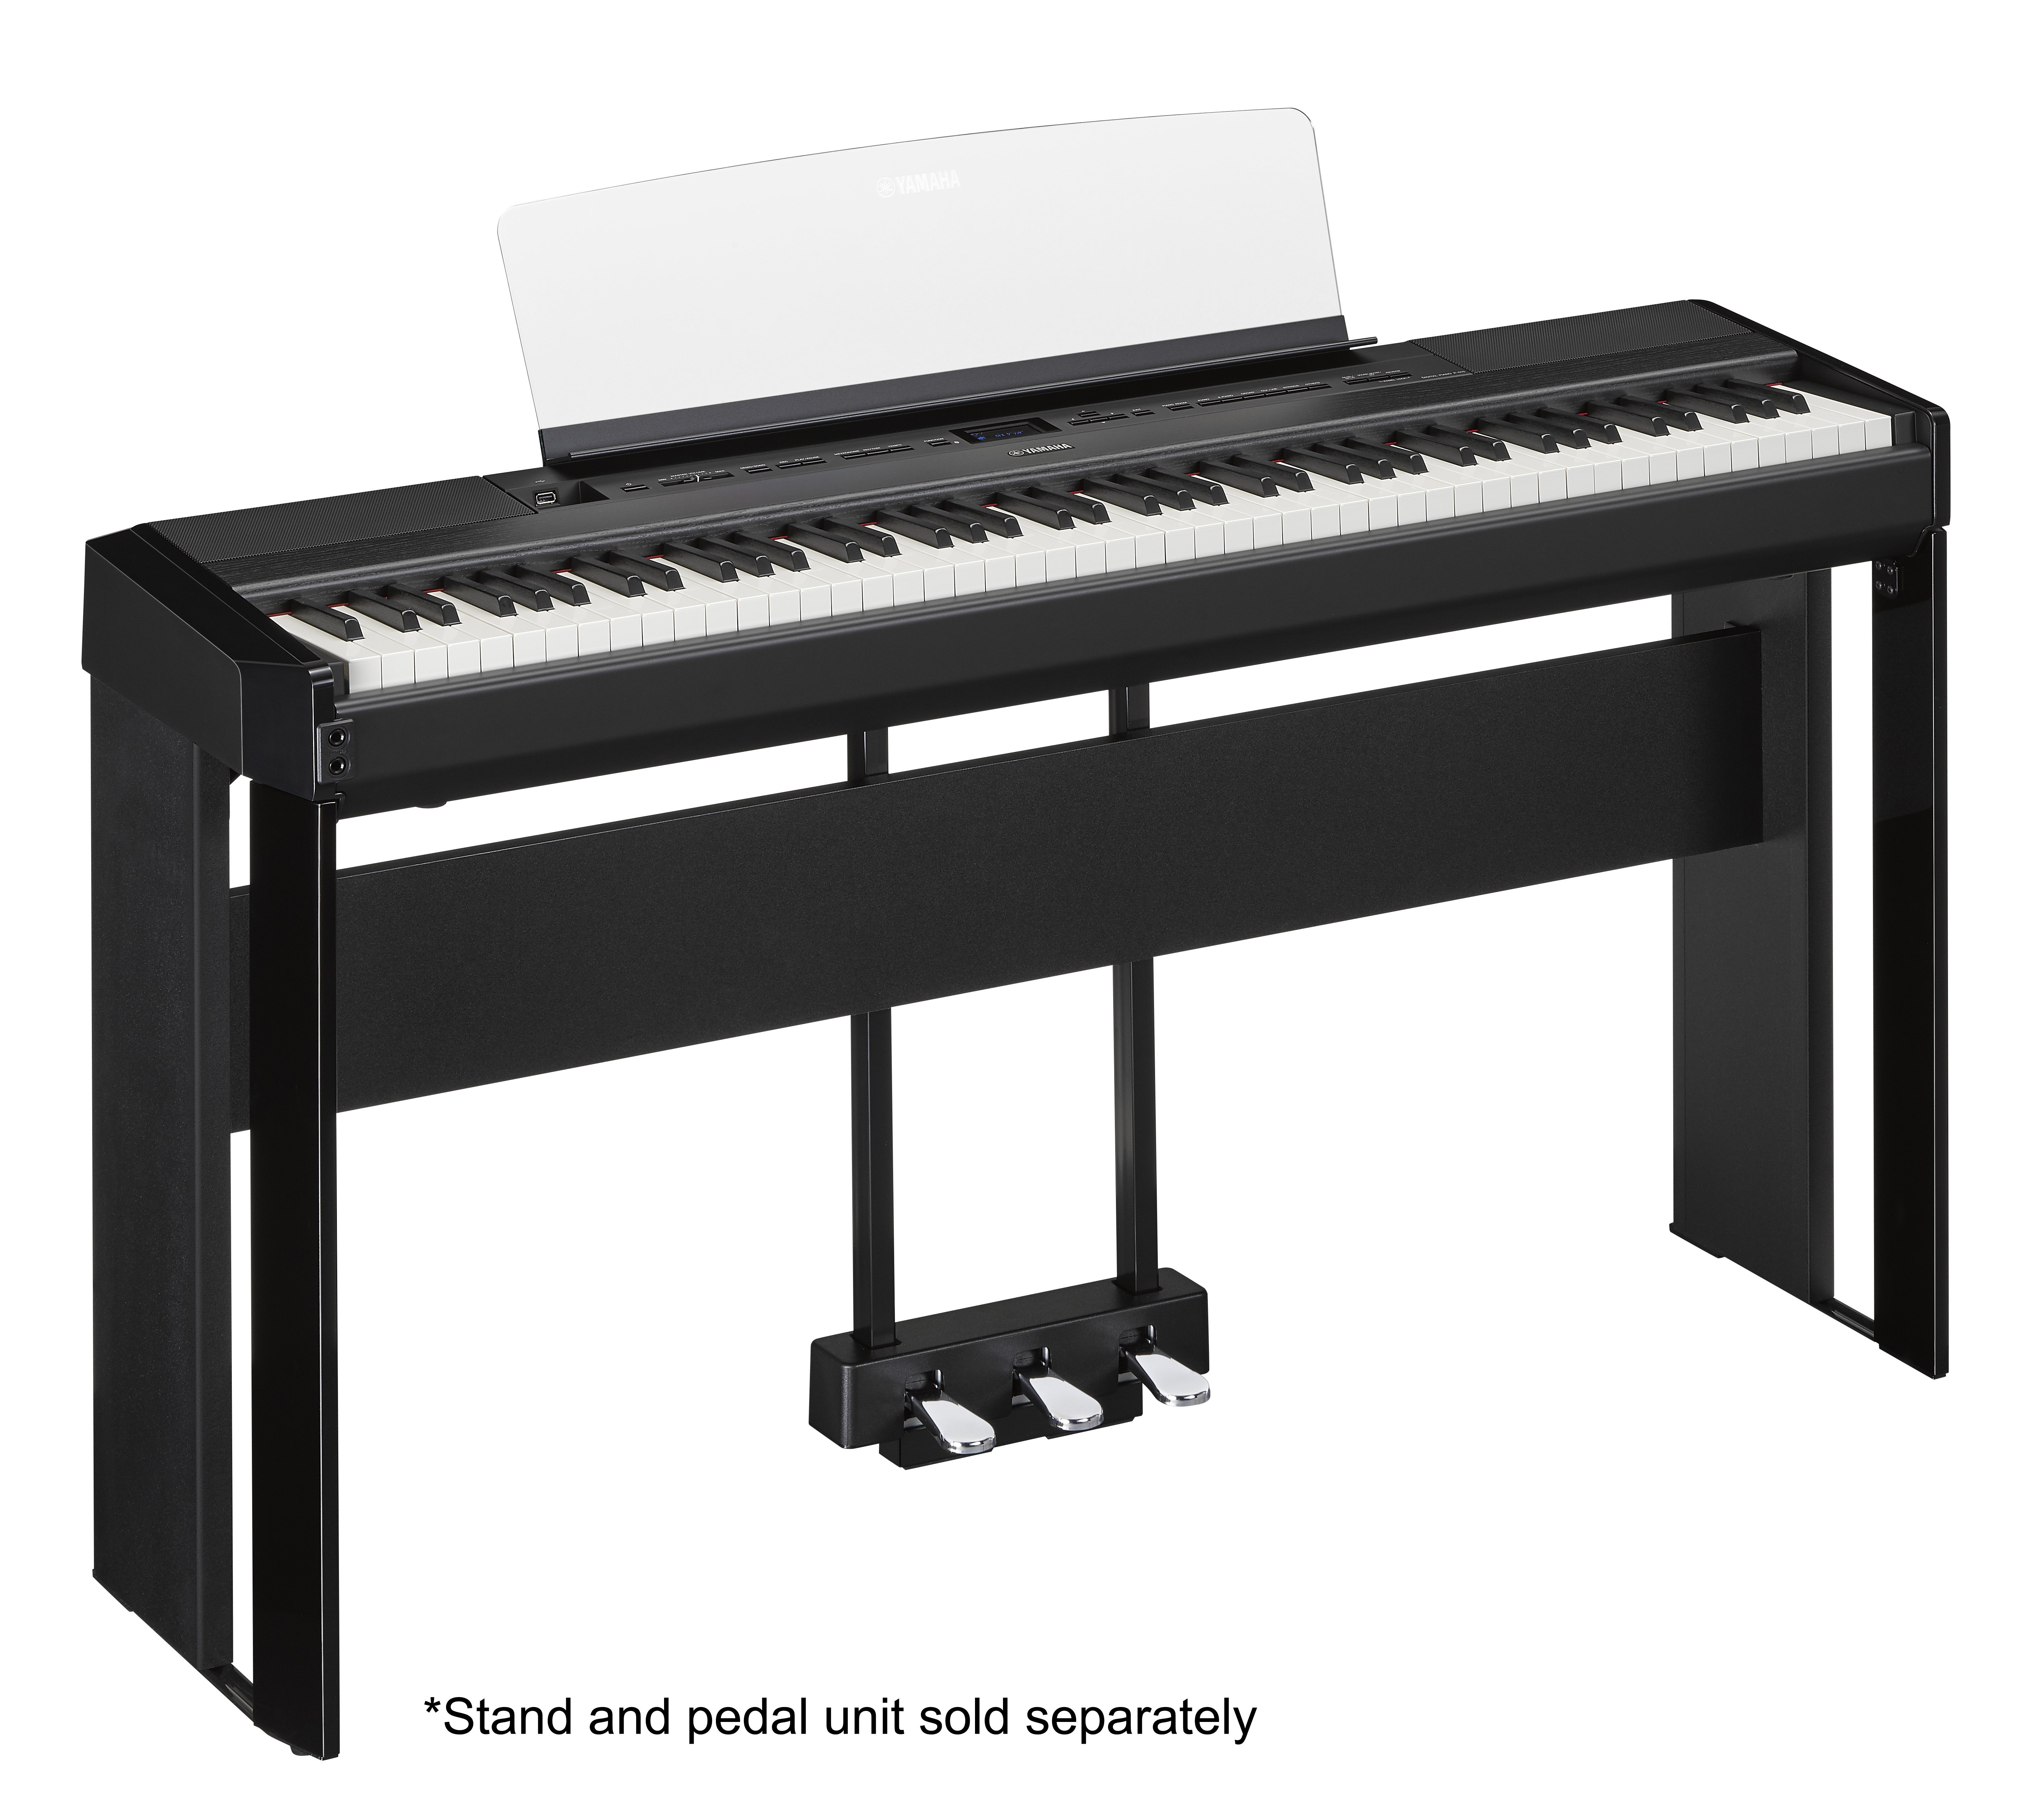 Decir Cobertizo molécula P-515 - More Features - Portables - Pianos - Musical Instruments - Products  - Yamaha USA